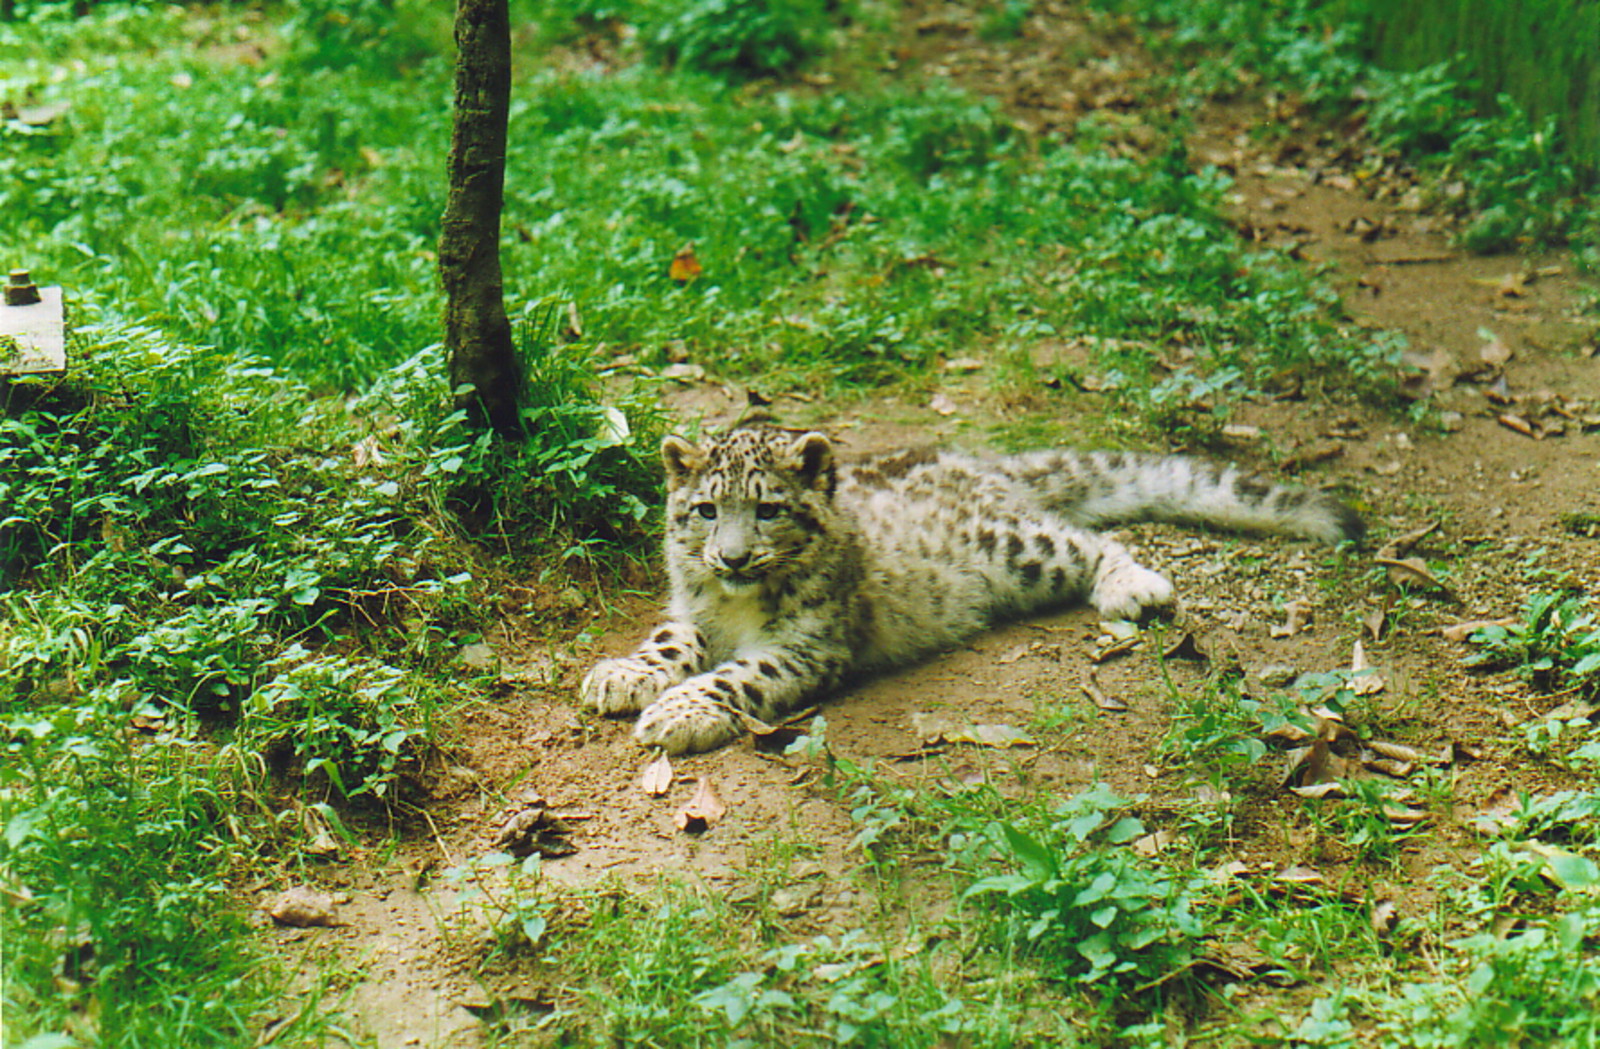 One of the snow leopard cubs in Darjeeling